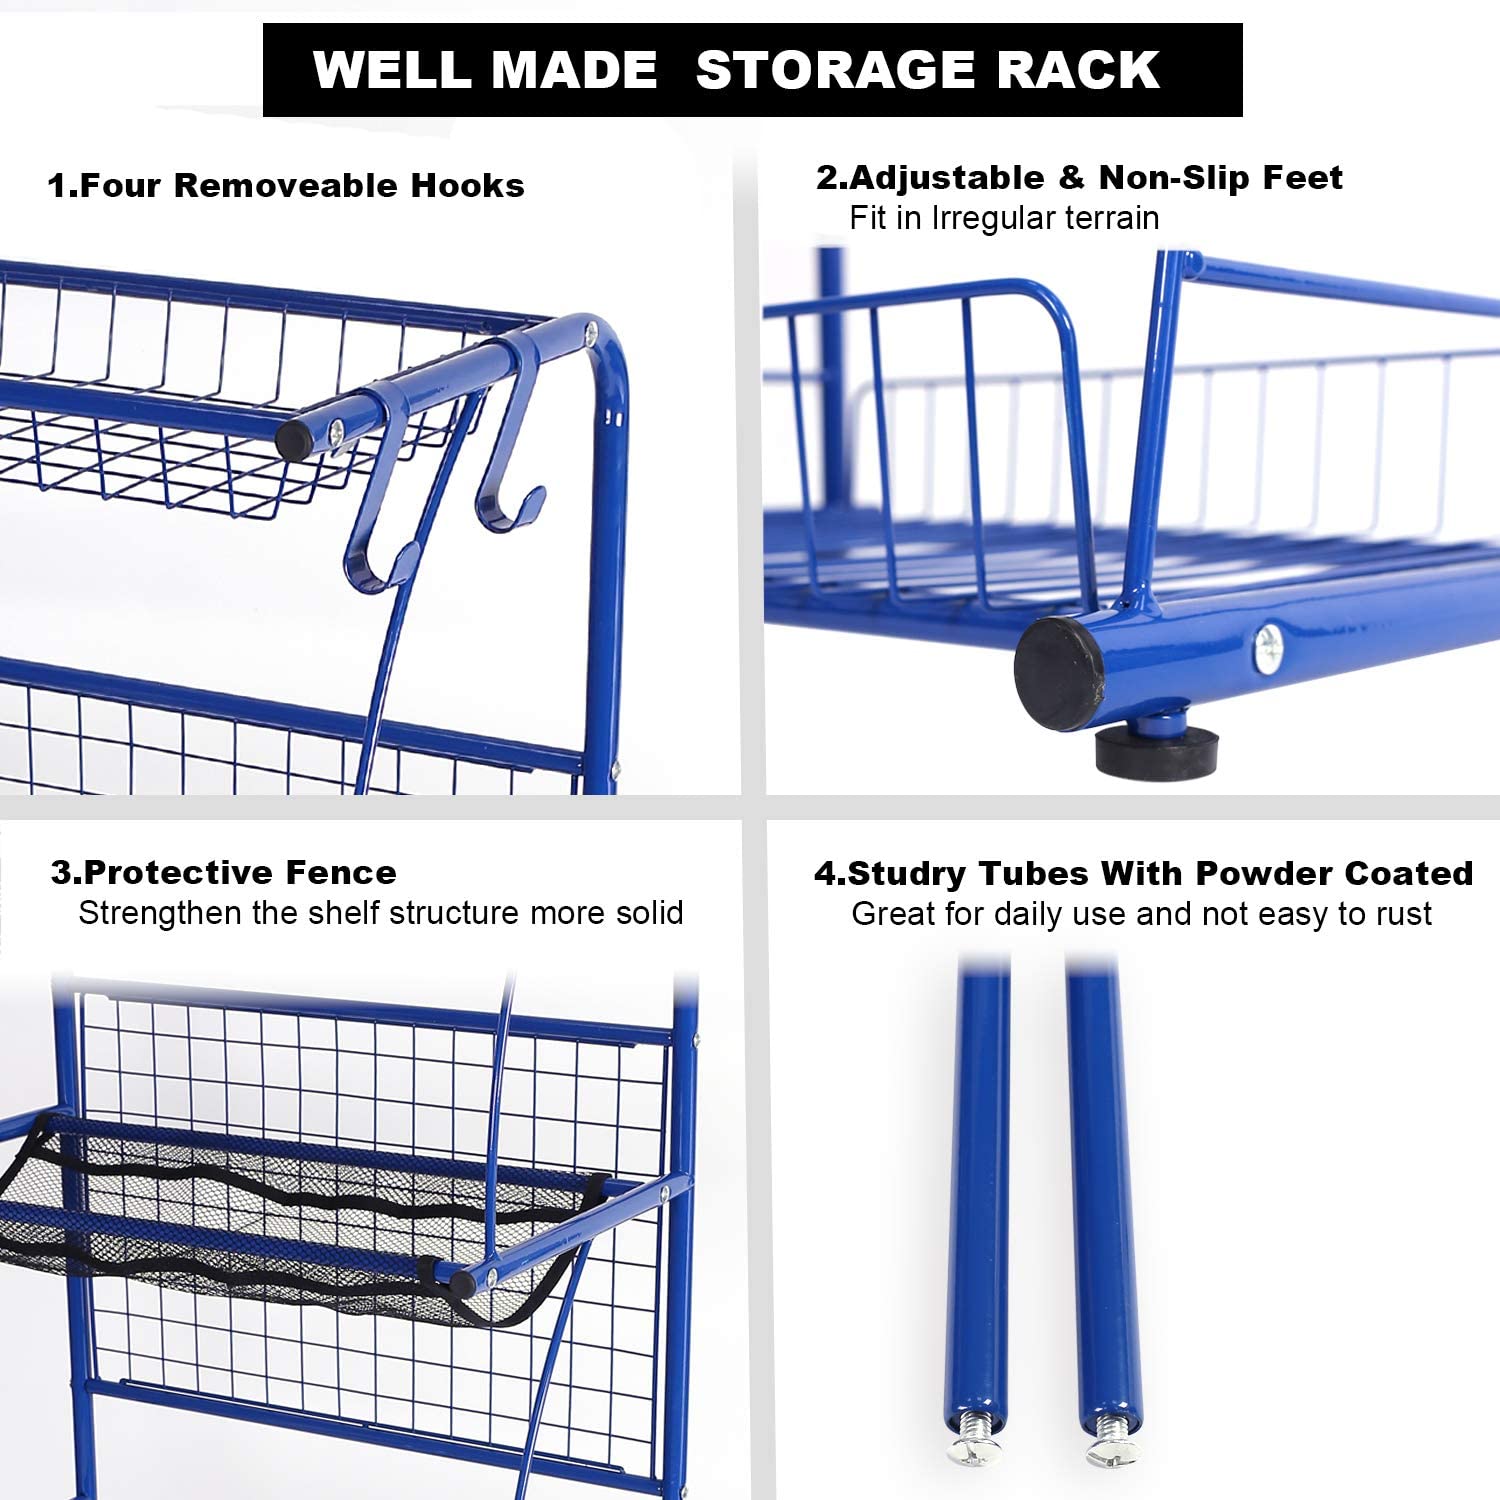 Mythinglogic Garage Storage System/Rolling Sports Ball Storage Cart,Sports Equipment Organizer for Kids,Steel 